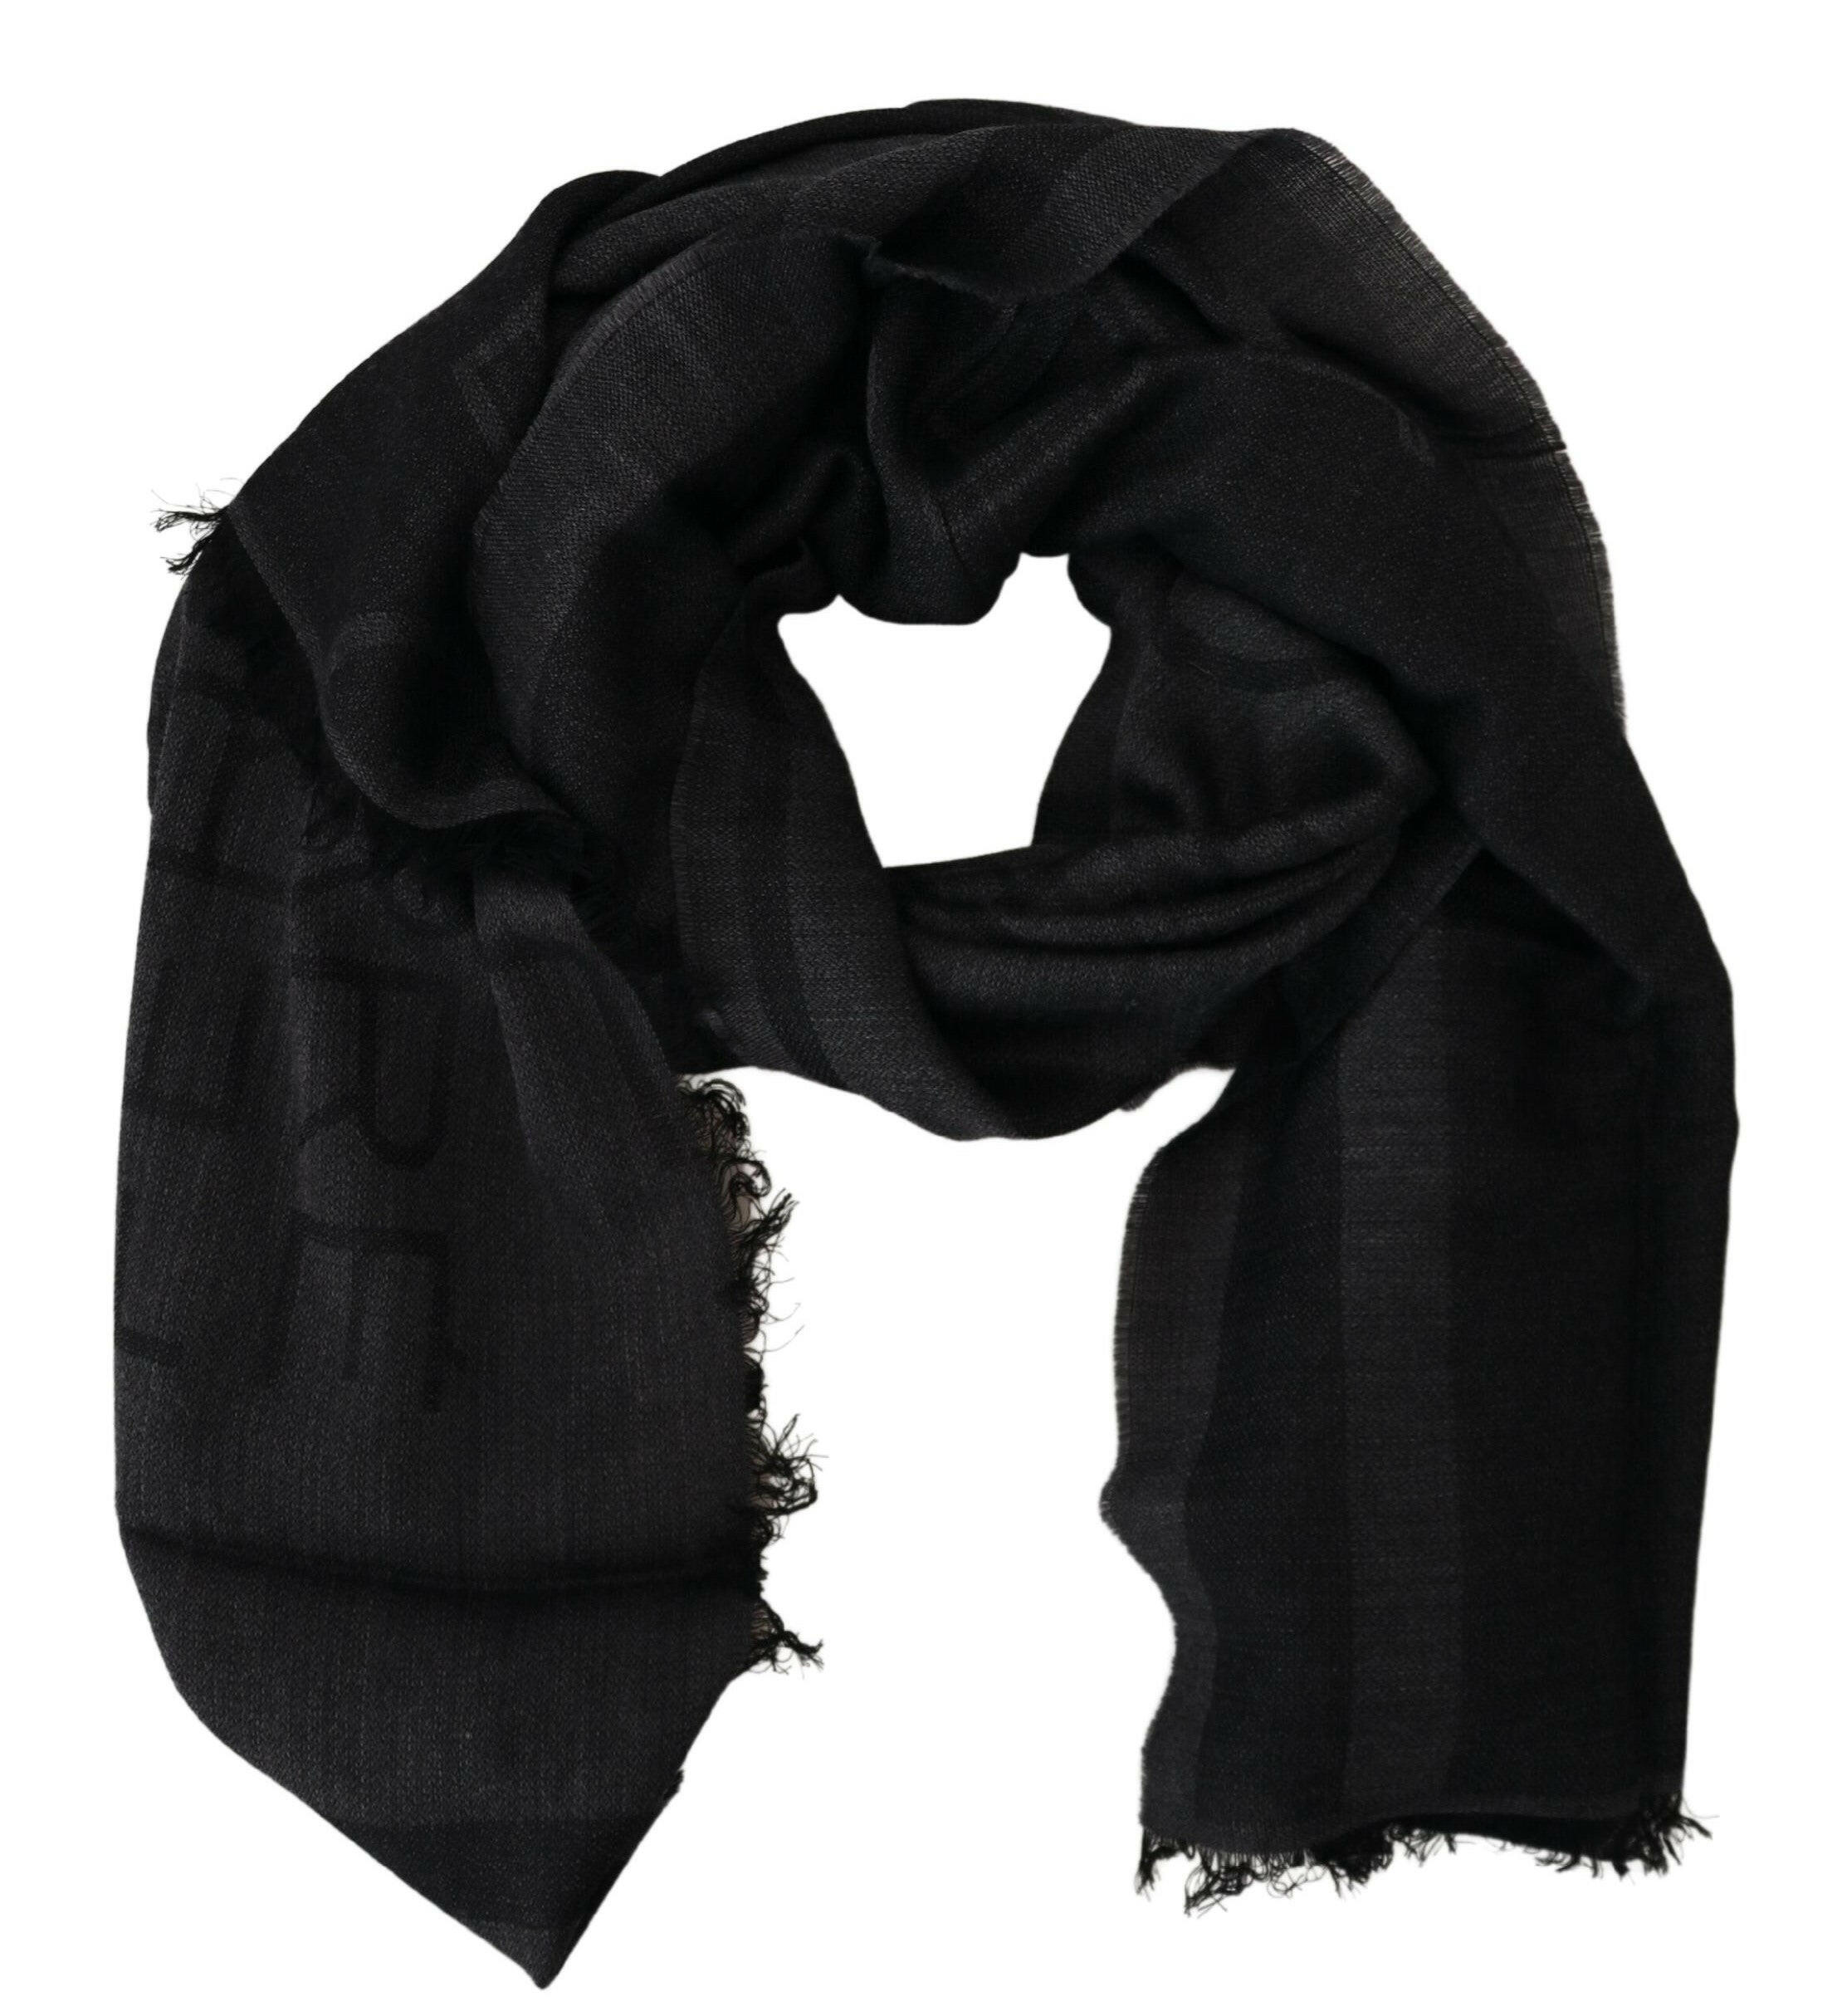 GF Ferre Black Wool Knitted Neck Wrap Shawl Fringes Scarf - GENUINE AUTHENTIC BRAND LLC  